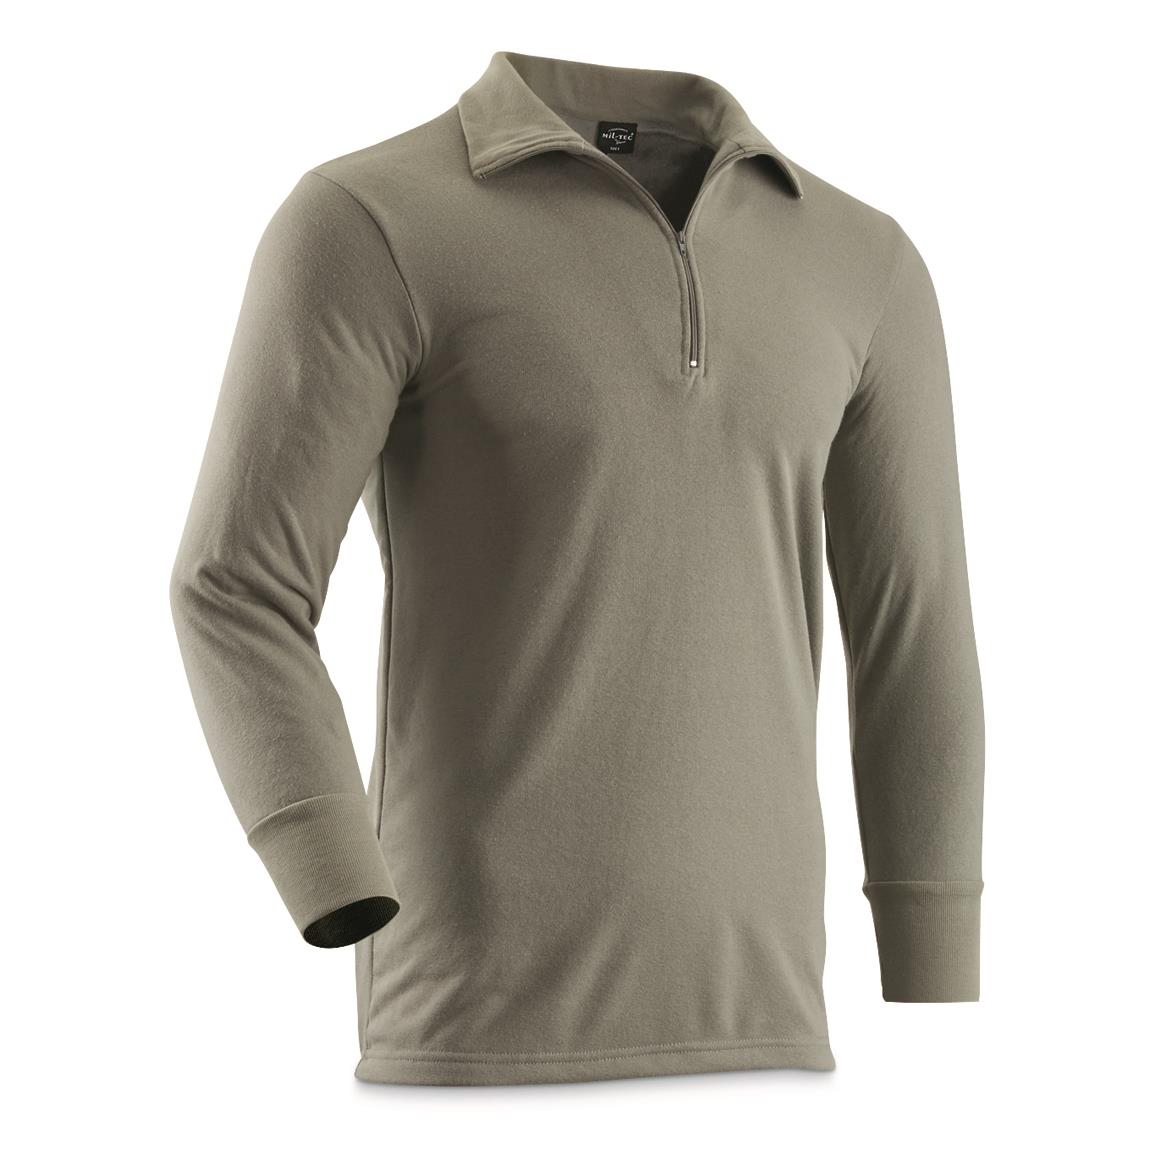 Mil-Tec Tricot Long Sleeve Quarter Zip Shirt, Foliage